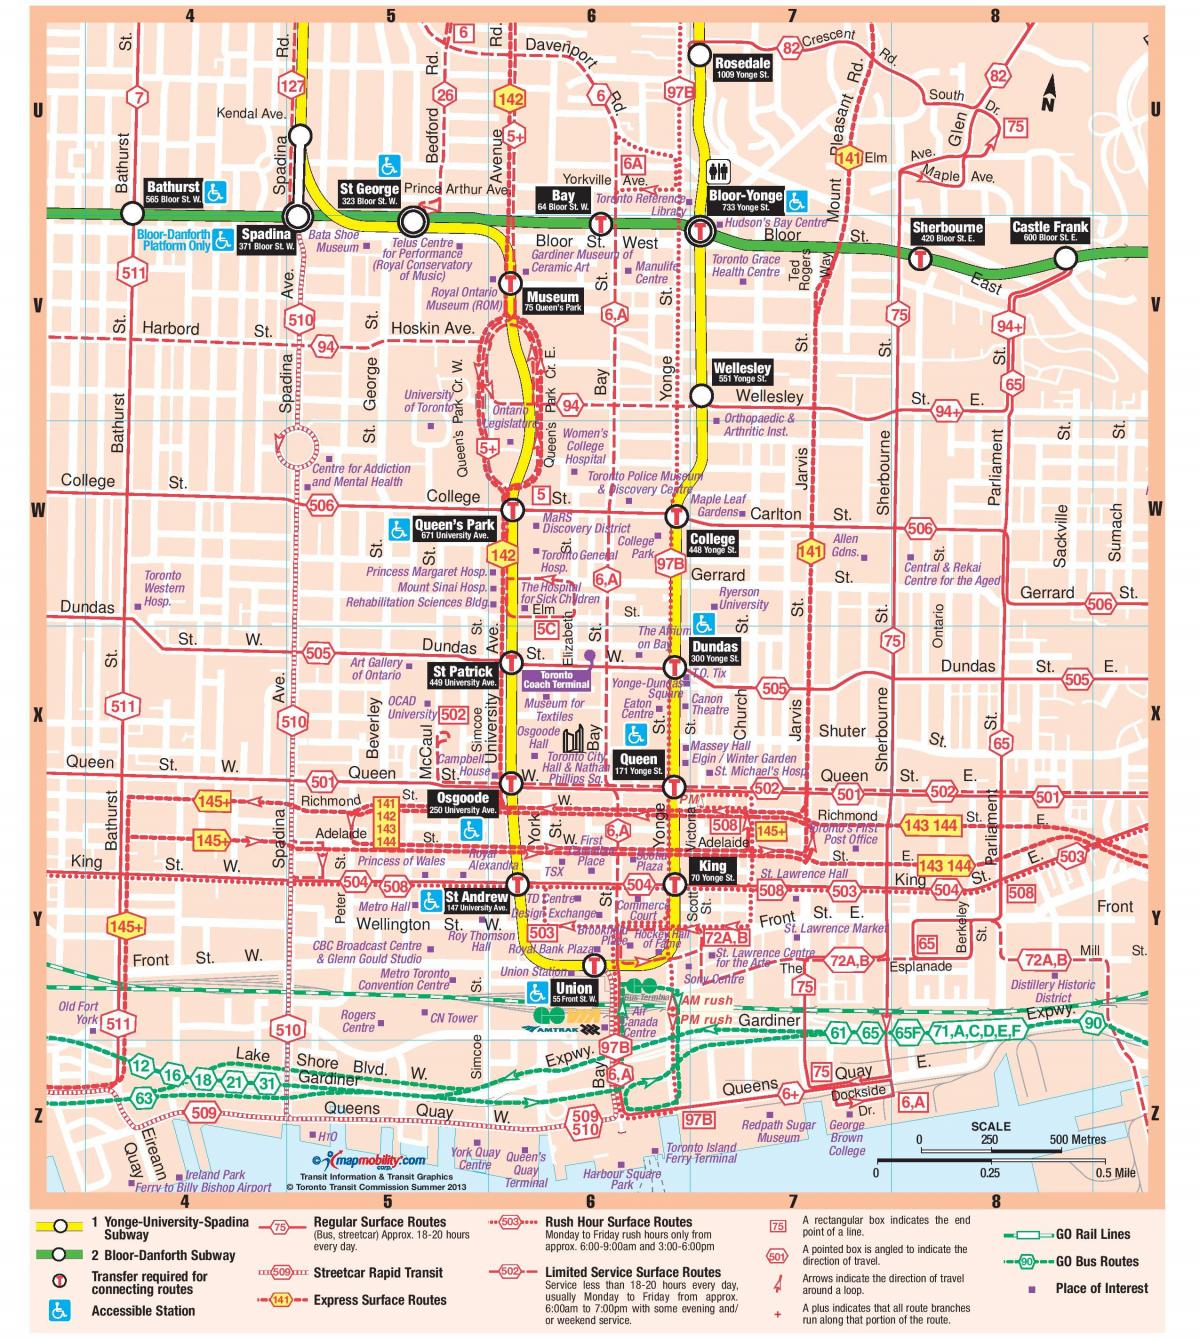 Peta dari stasiun Kereta bawah tanah pusat kota Toronto